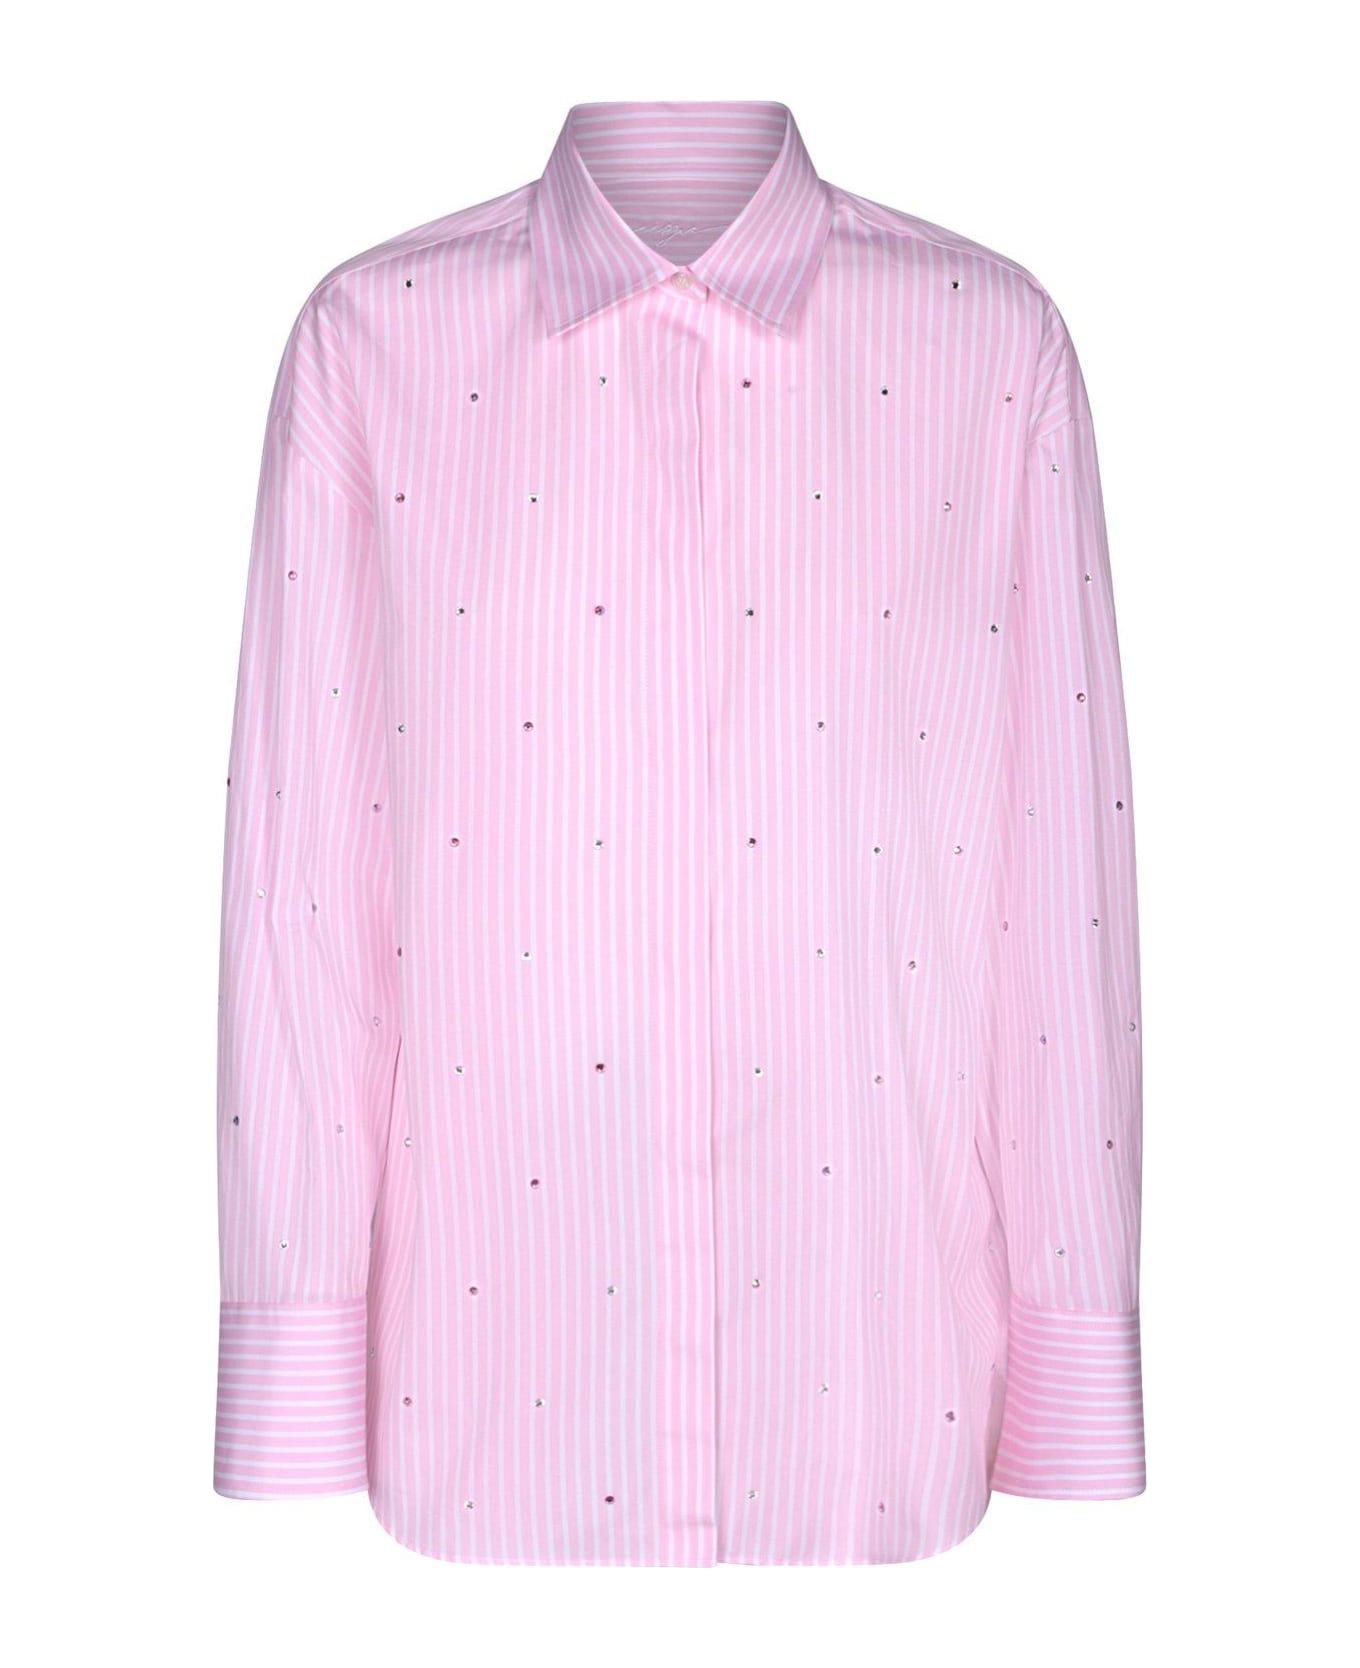 MSGM Long Sleeved Embellished Striped Shirt - Rosa シャツ